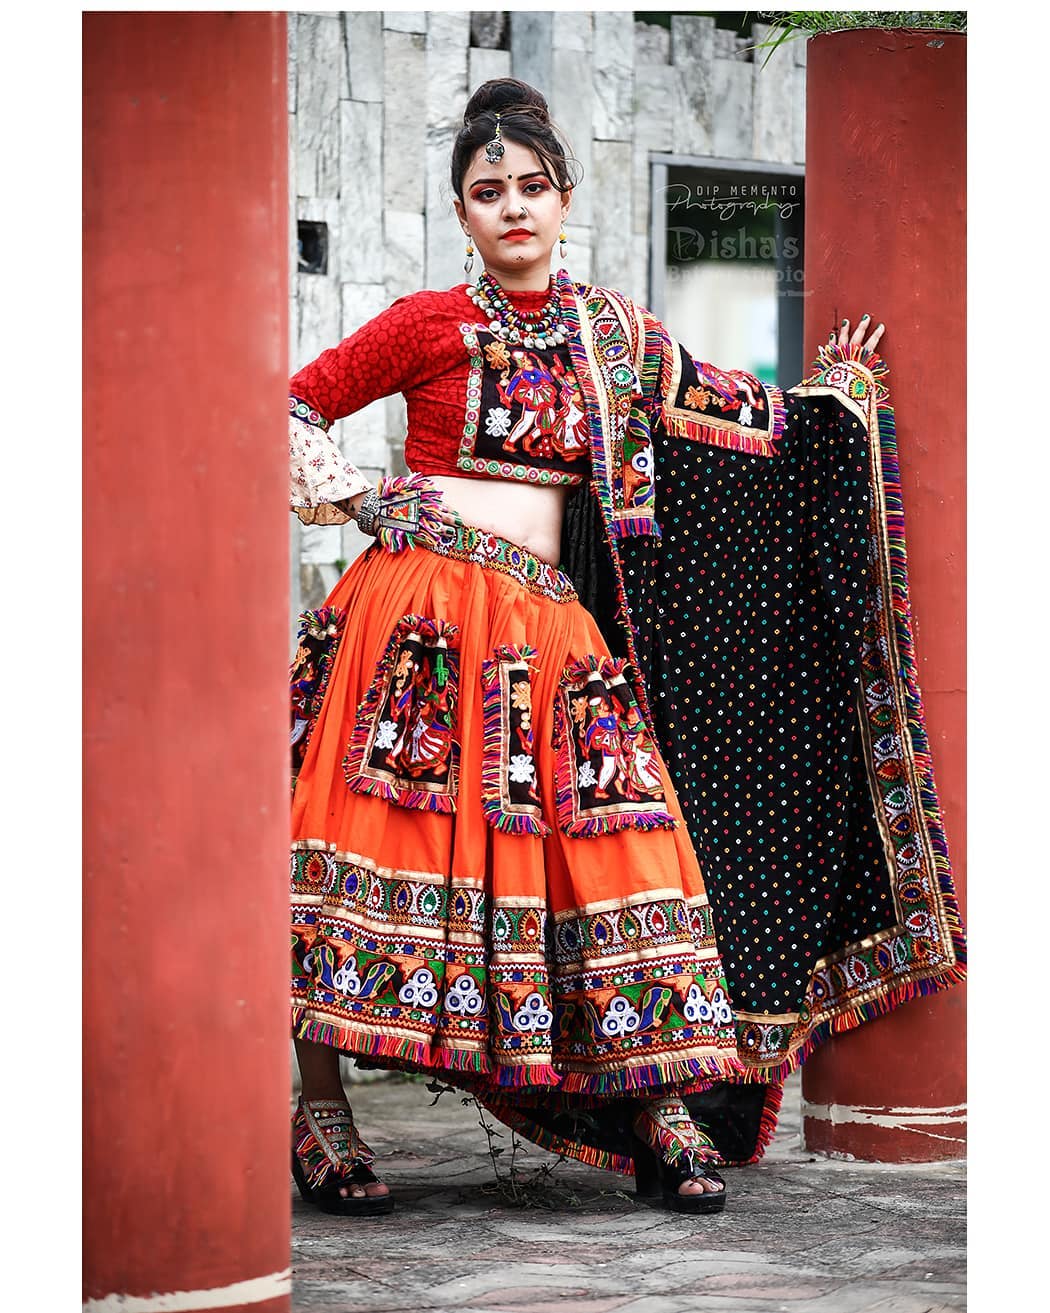 Let the world see 
The C O L O U R S and C U L T U R E 
of GUJARAT this #Navratri2019.
.
.
MUA: @dishabeautysaloonacademynikol @dishapanchal246 
Shoot: @dip_memento_photography
@meandmyphotography11
InFrame: @kajal_thakkar._0912
Jewellery: @nancyhandicraft9
Costume by: @rashmithummar .
.
#photoshoot #ethnic #traditionalart #ahmedabad #gujarati  #pop #makeup #navratrichaniyacholi #chaniyacholi #indianfashionblogger  #fashionblogger #makeuptutorial #weddingdress #sexy#instagram #instapic #bollywood #bollywoodhotness #bollywoodactresses #indian #pic #picoftheday #photooftheday #instagood#instamood #festivalofnations #festival